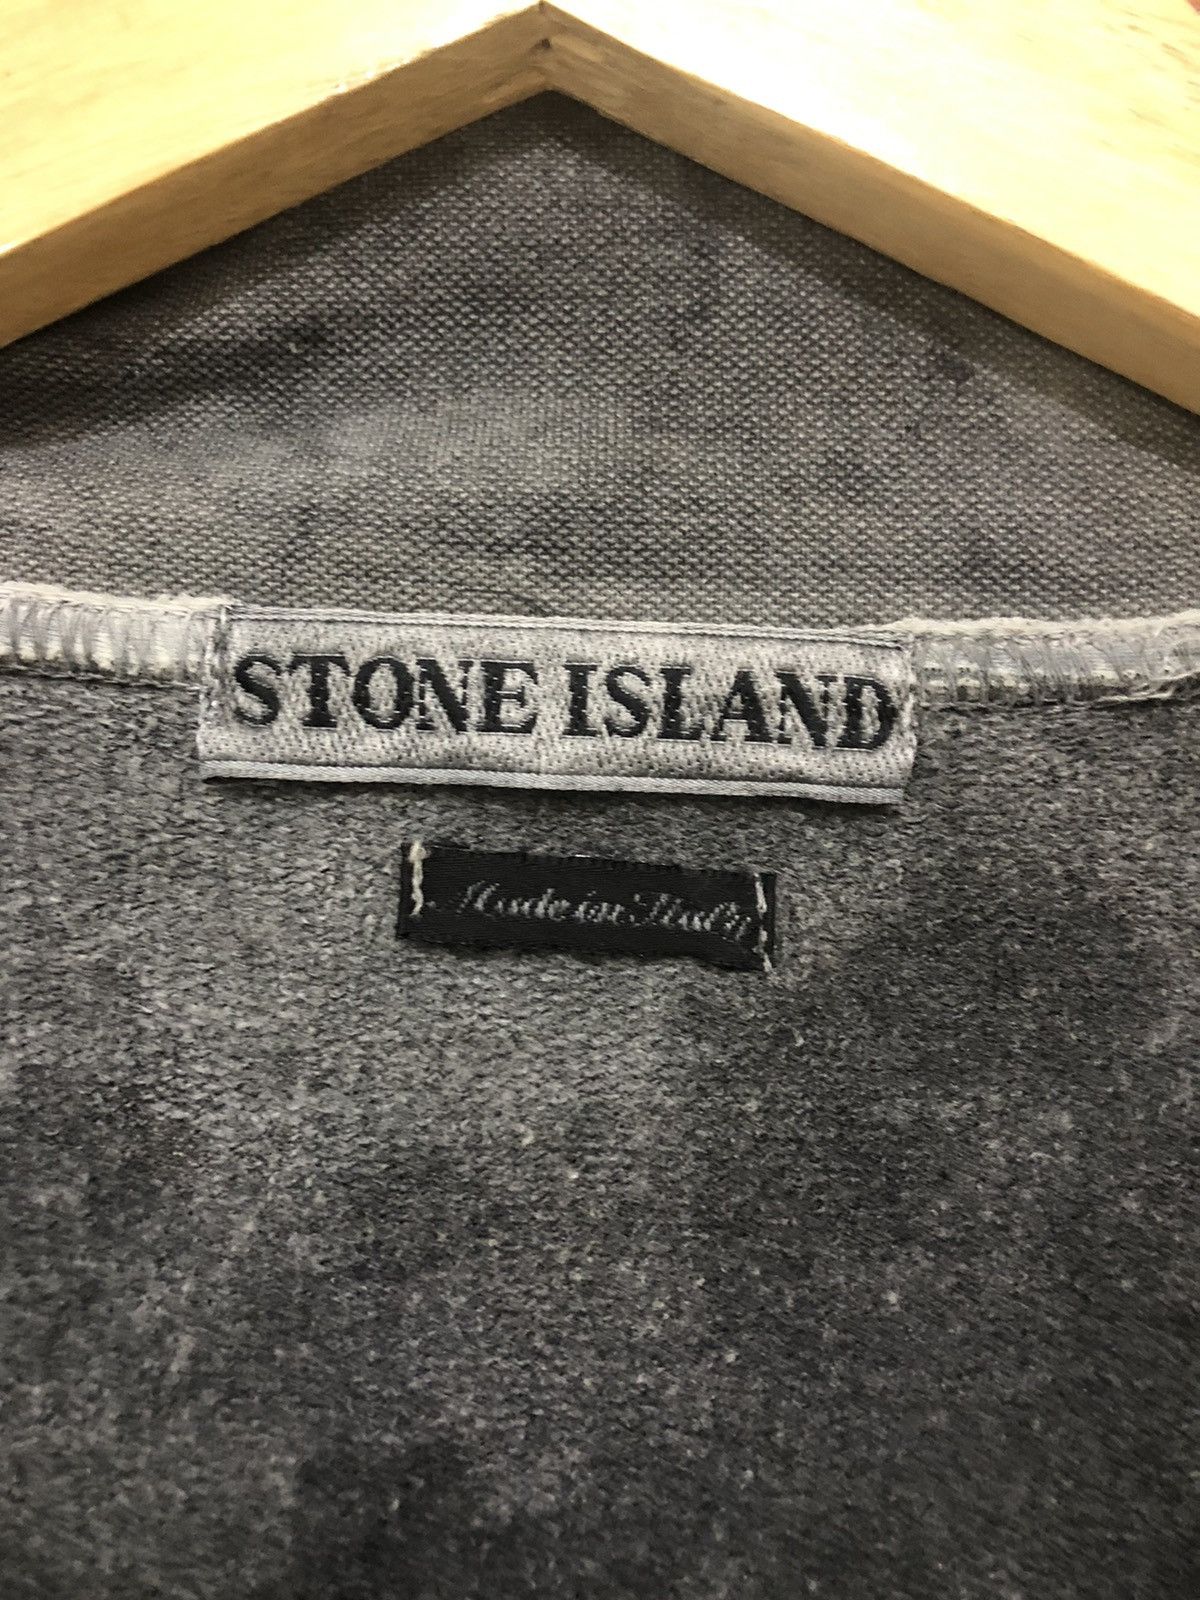 Stone Island SS96 Sweatshirt Acid Wash - 8